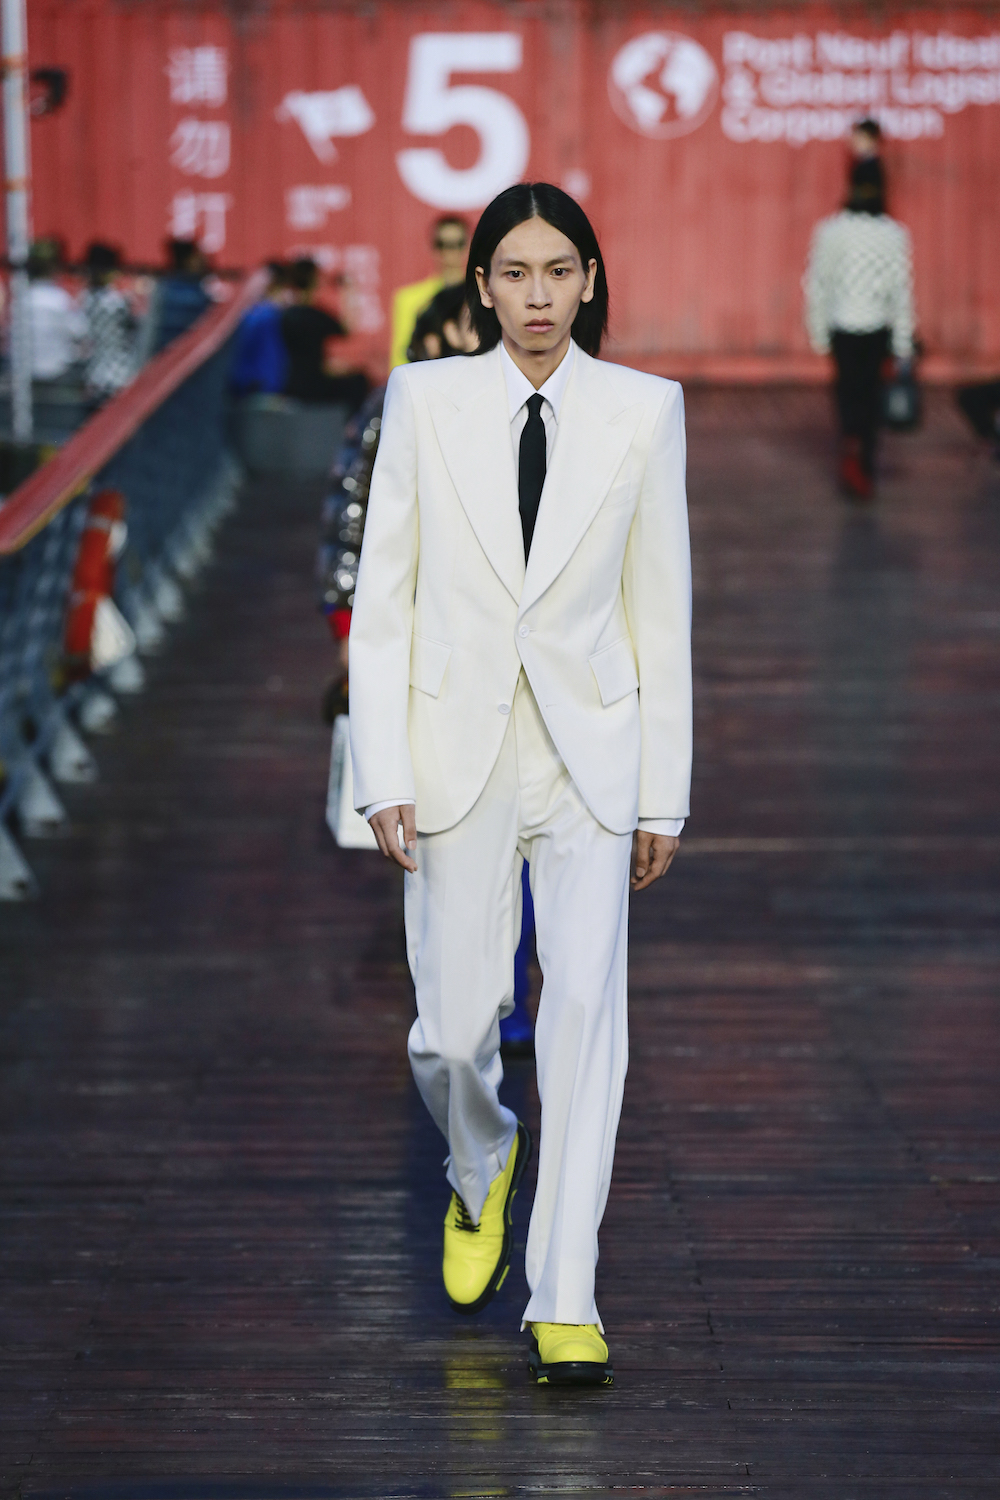 Kris Wu turns heads in Louis Vuitton